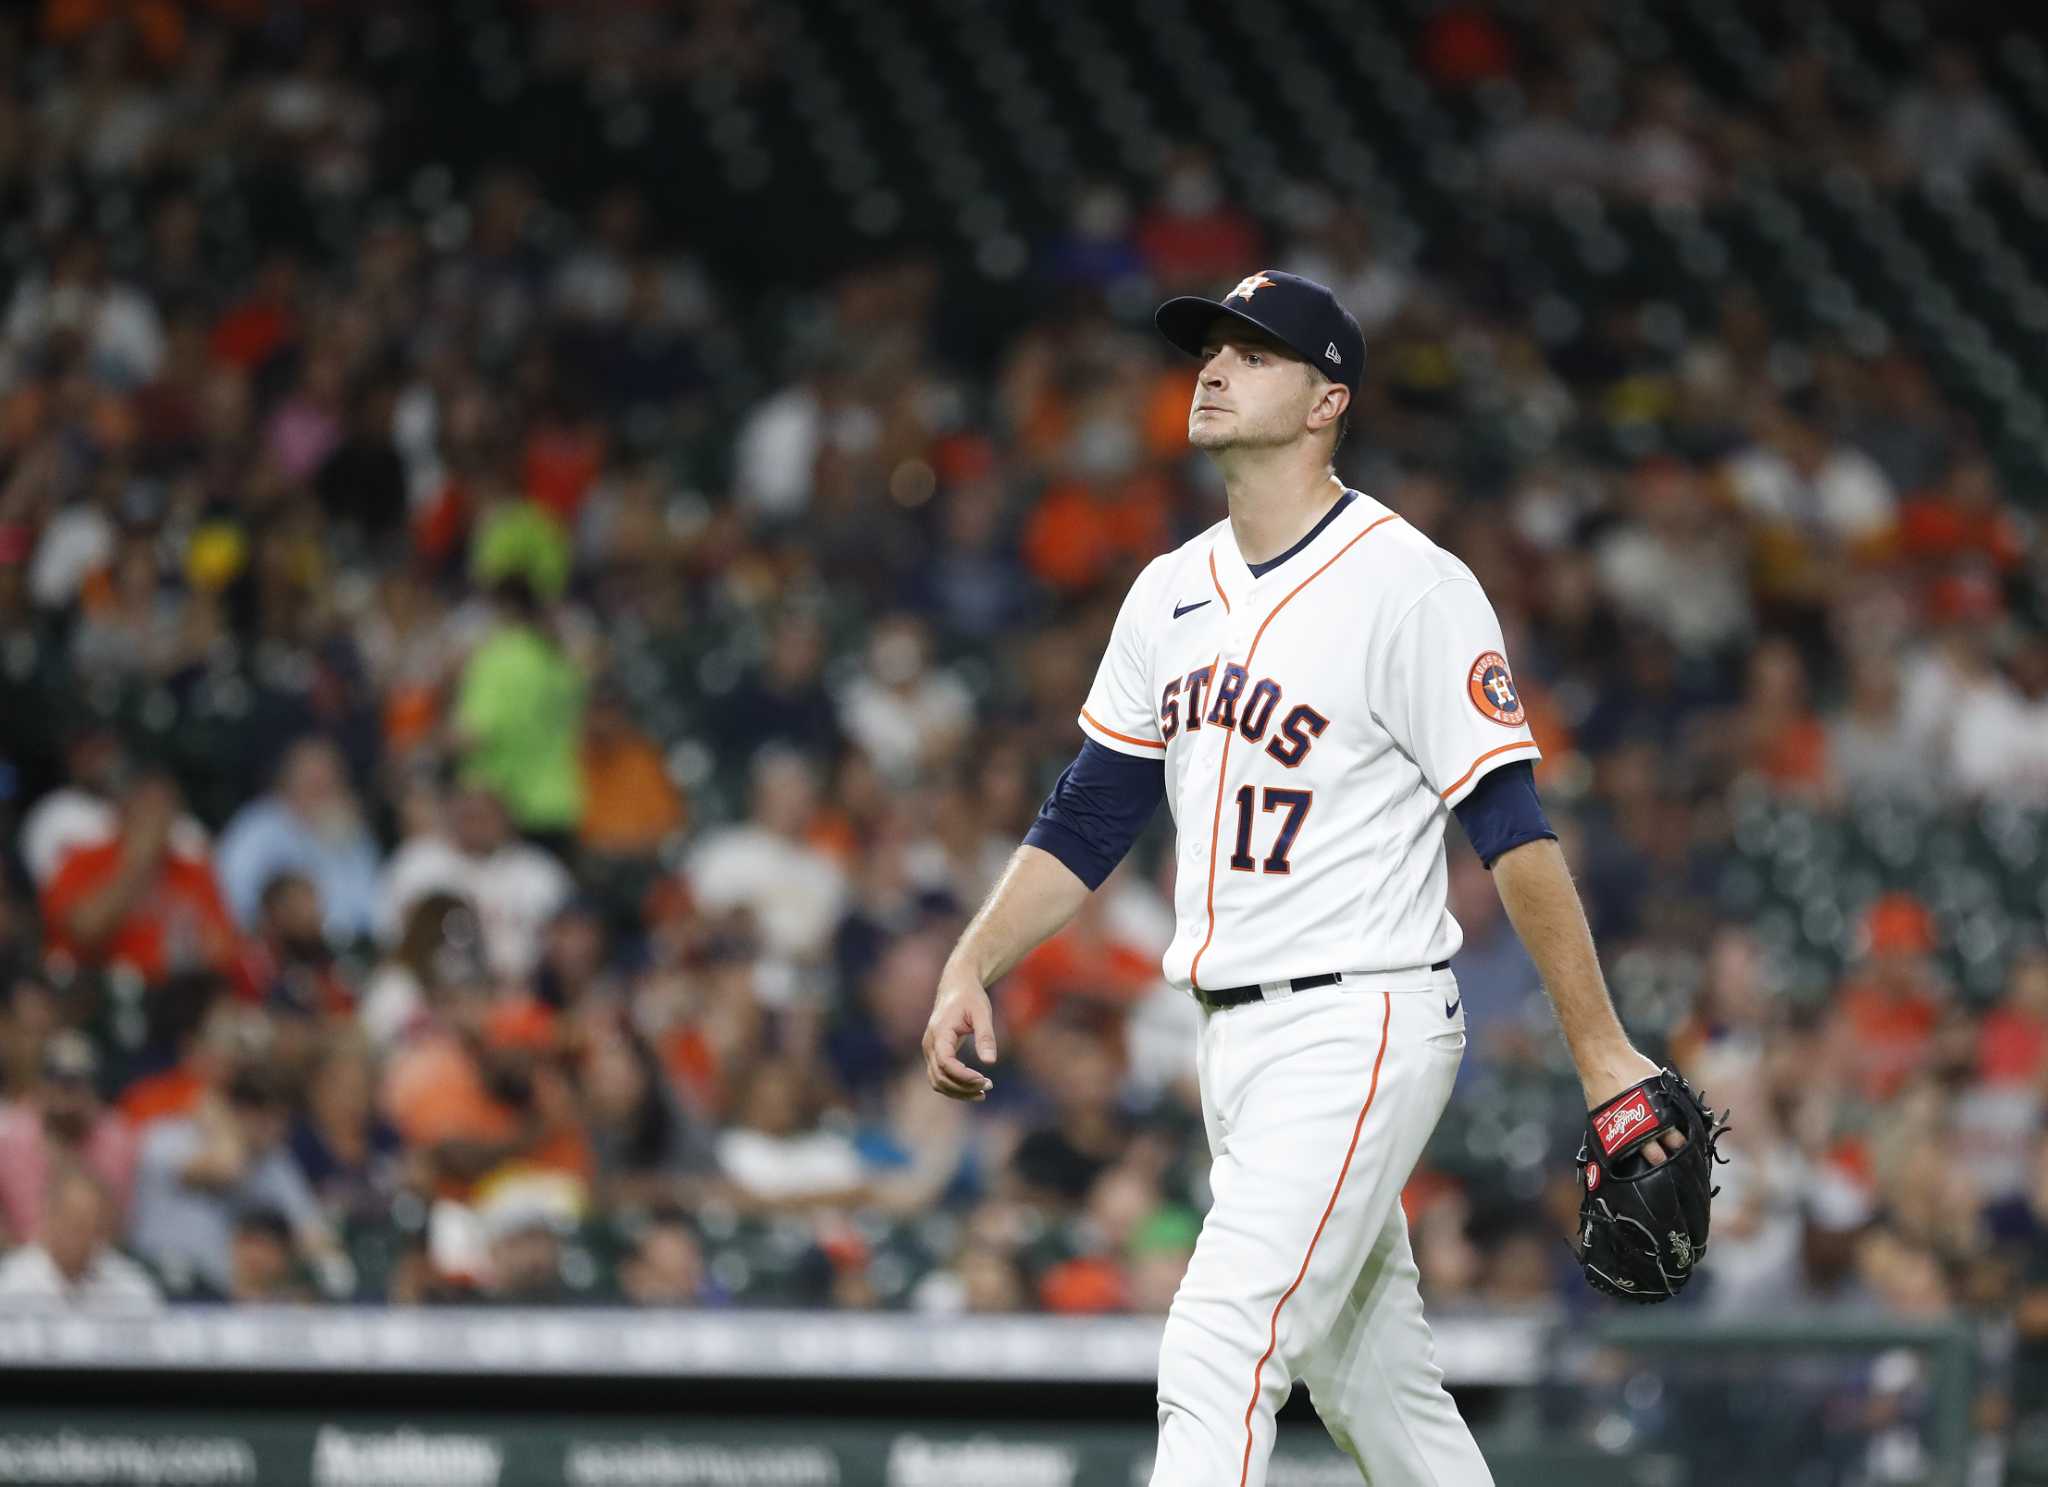 Houston Astros Agree To Terms With Jake Odorizzi